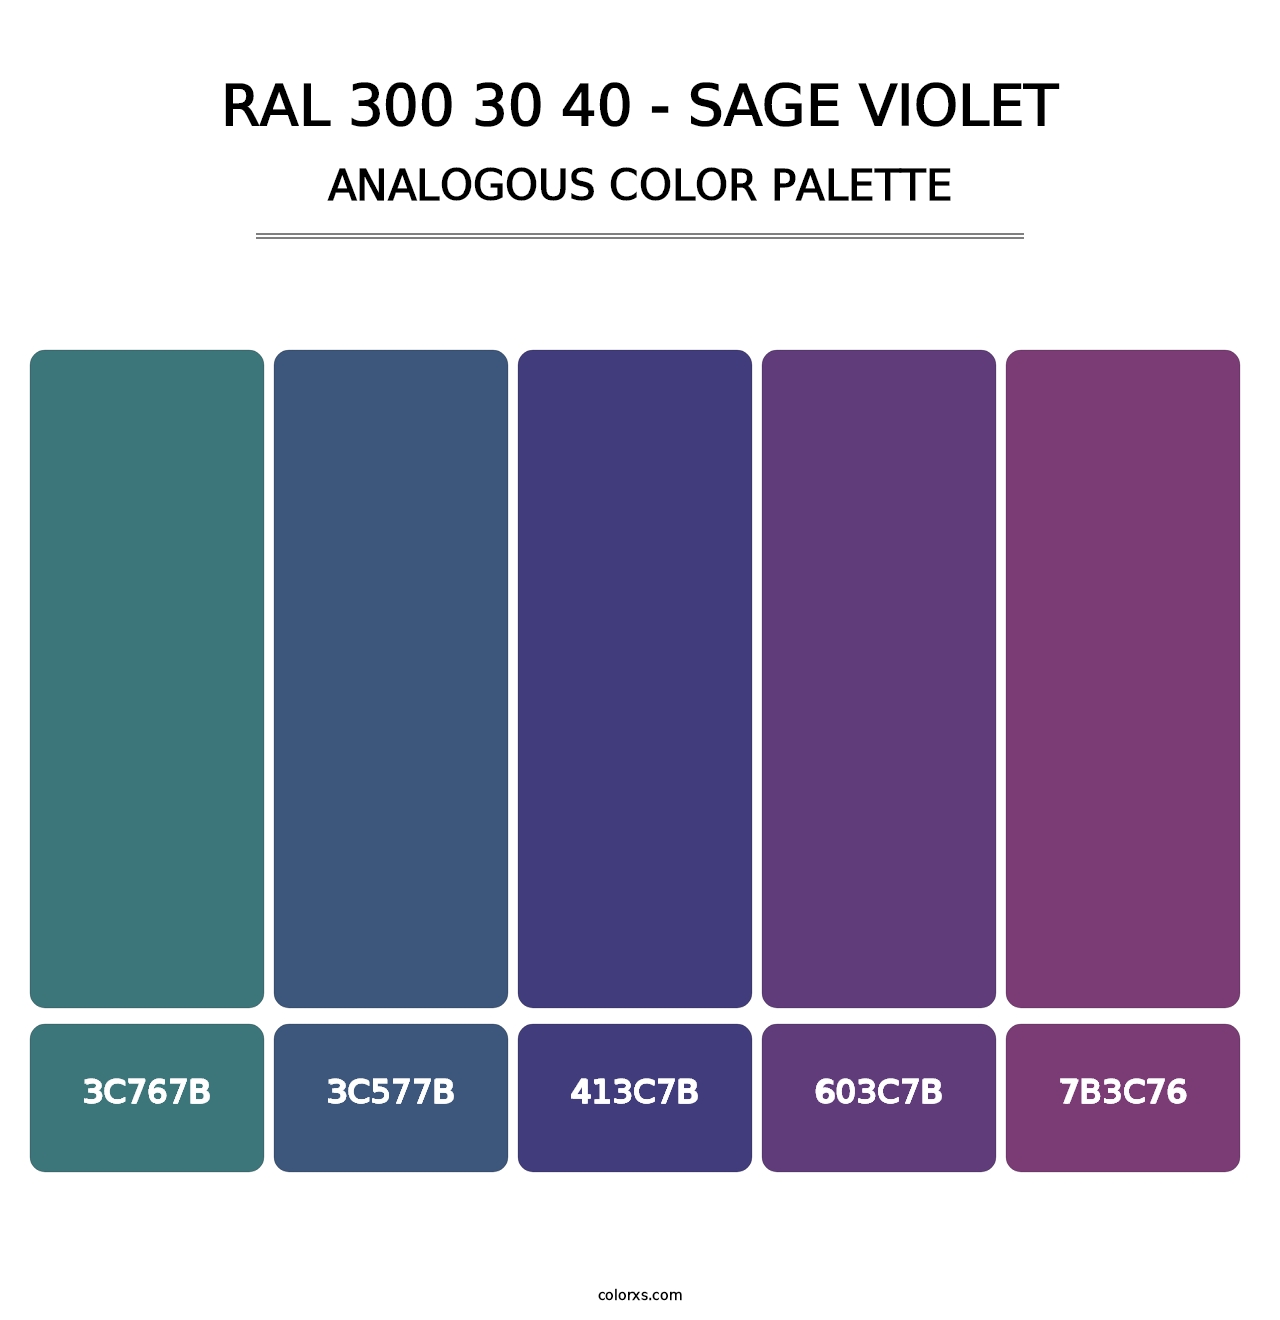 RAL 300 30 40 - Sage Violet - Analogous Color Palette